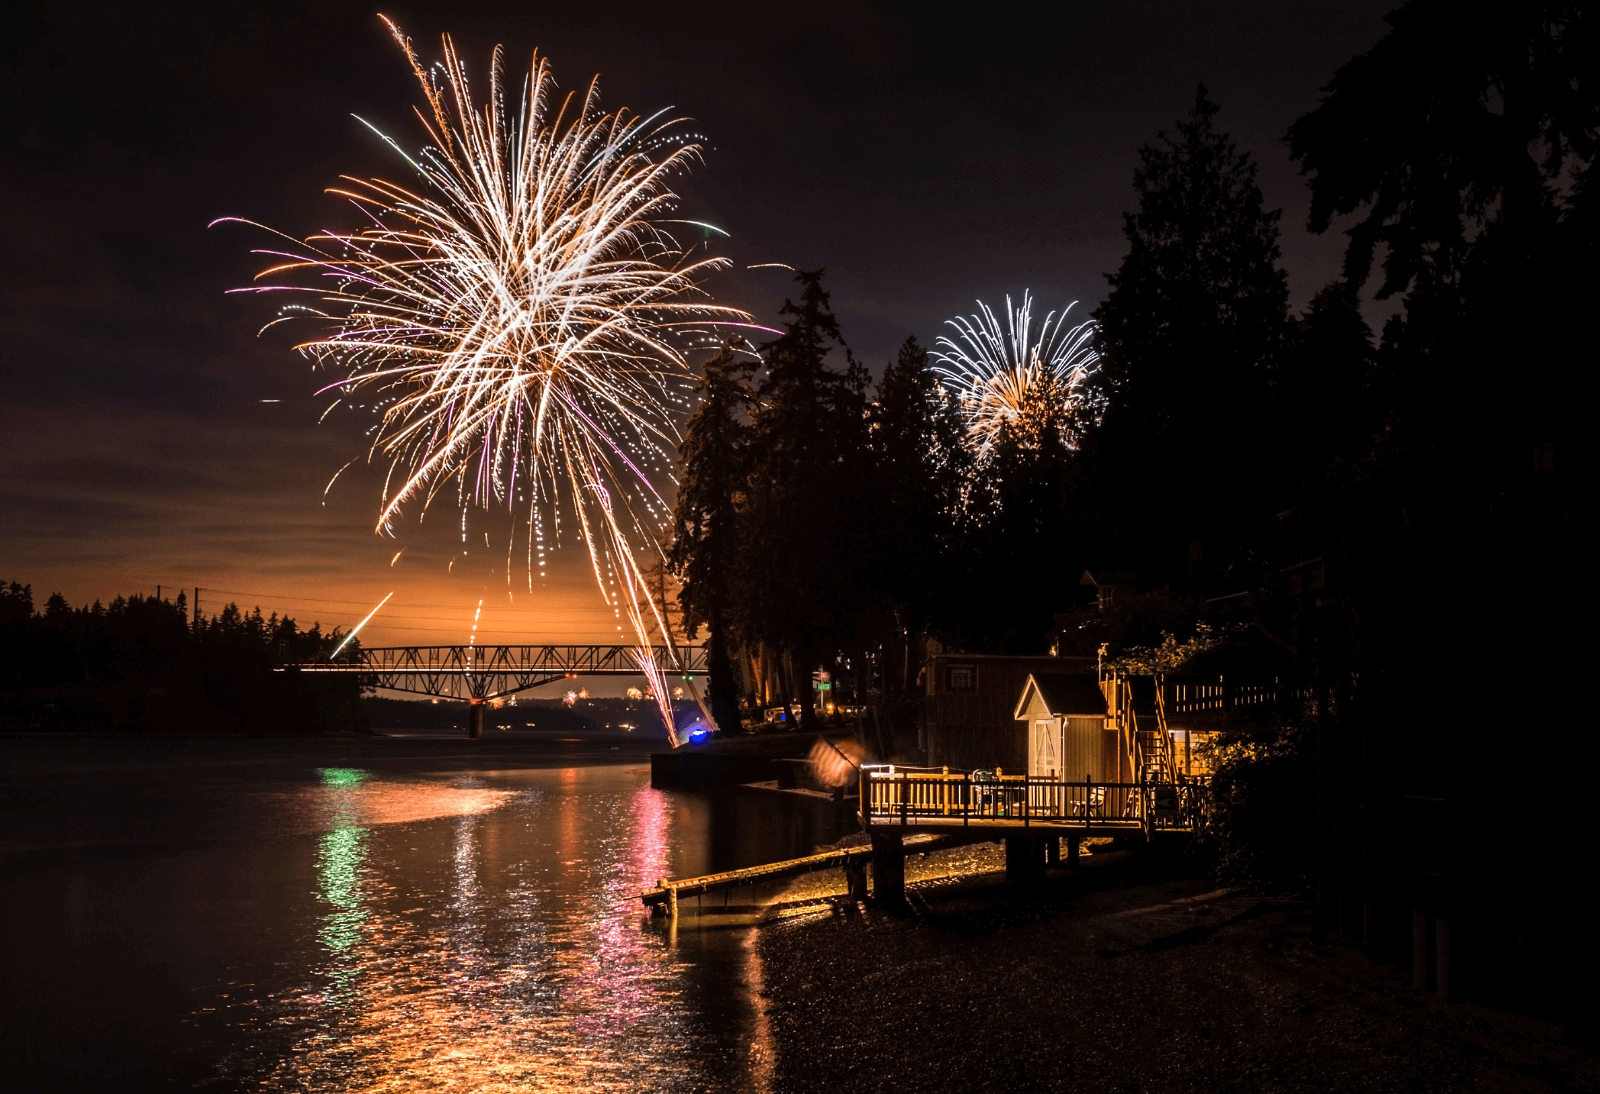 A beautiful waterside firework display for July 4th weekend